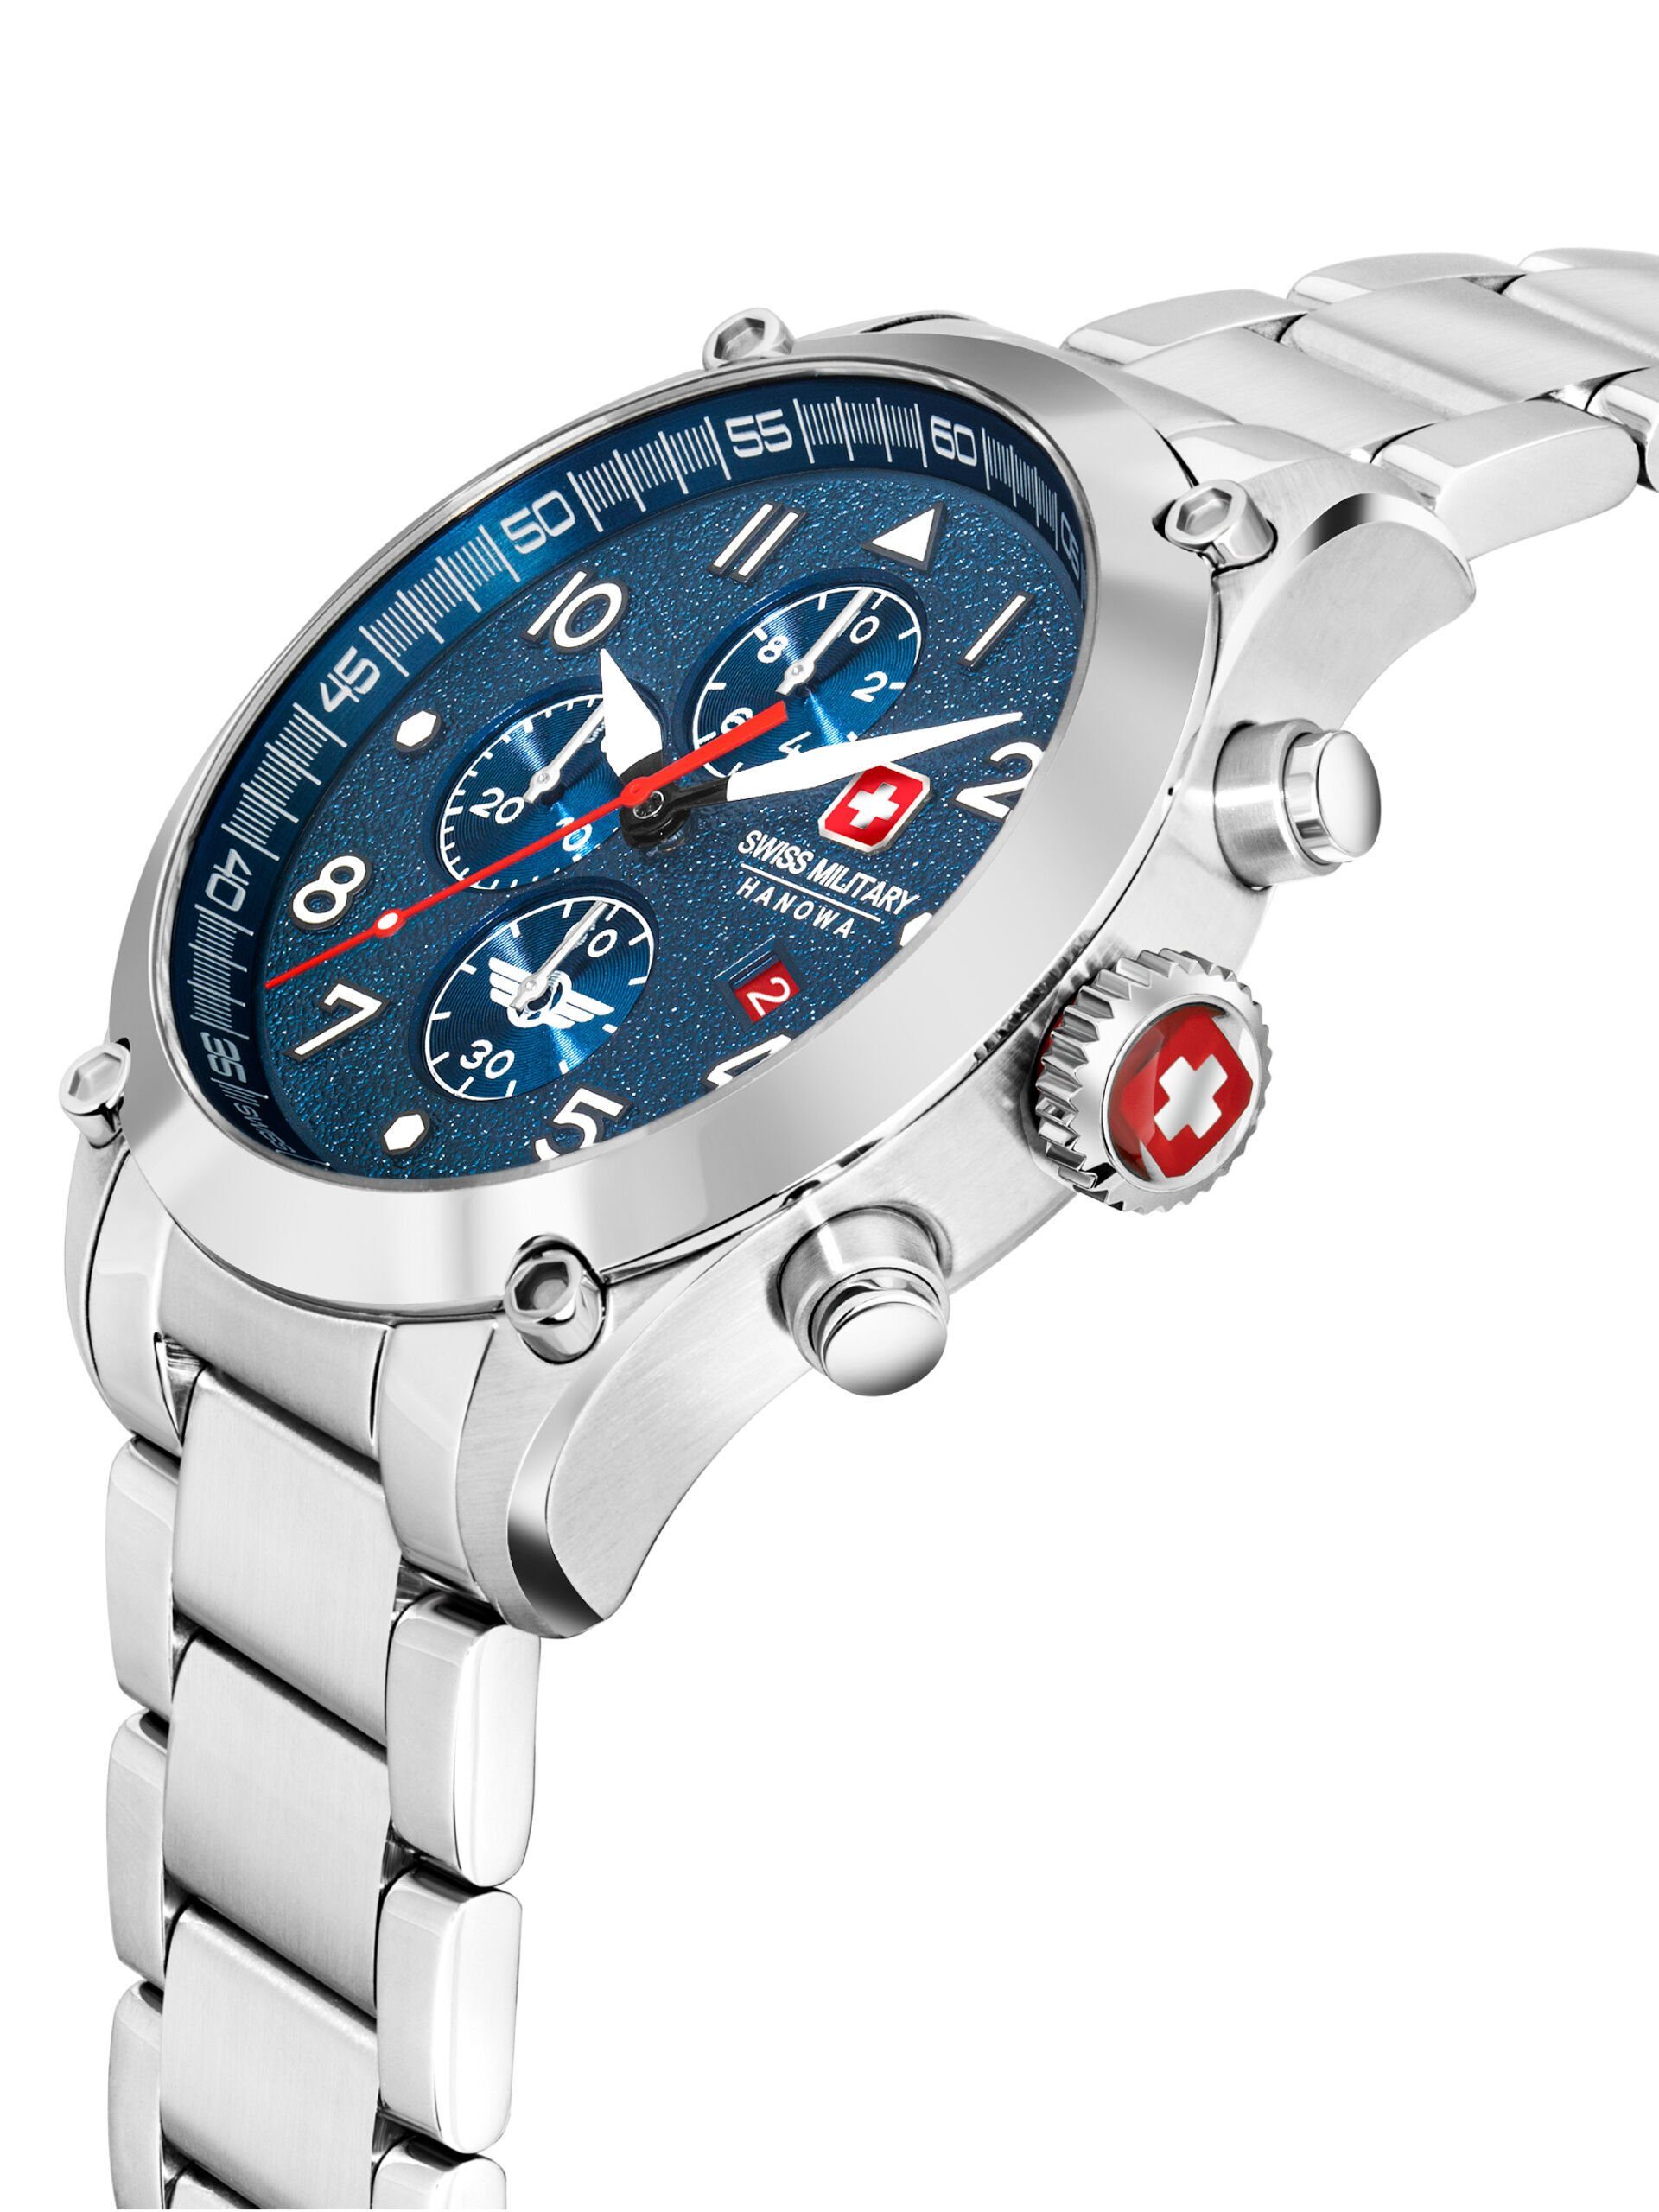 hochwertigem Edelstahl-Armband Hanowa Chronograph Blau Military mit Swiss NIGHTFLIGHTER,